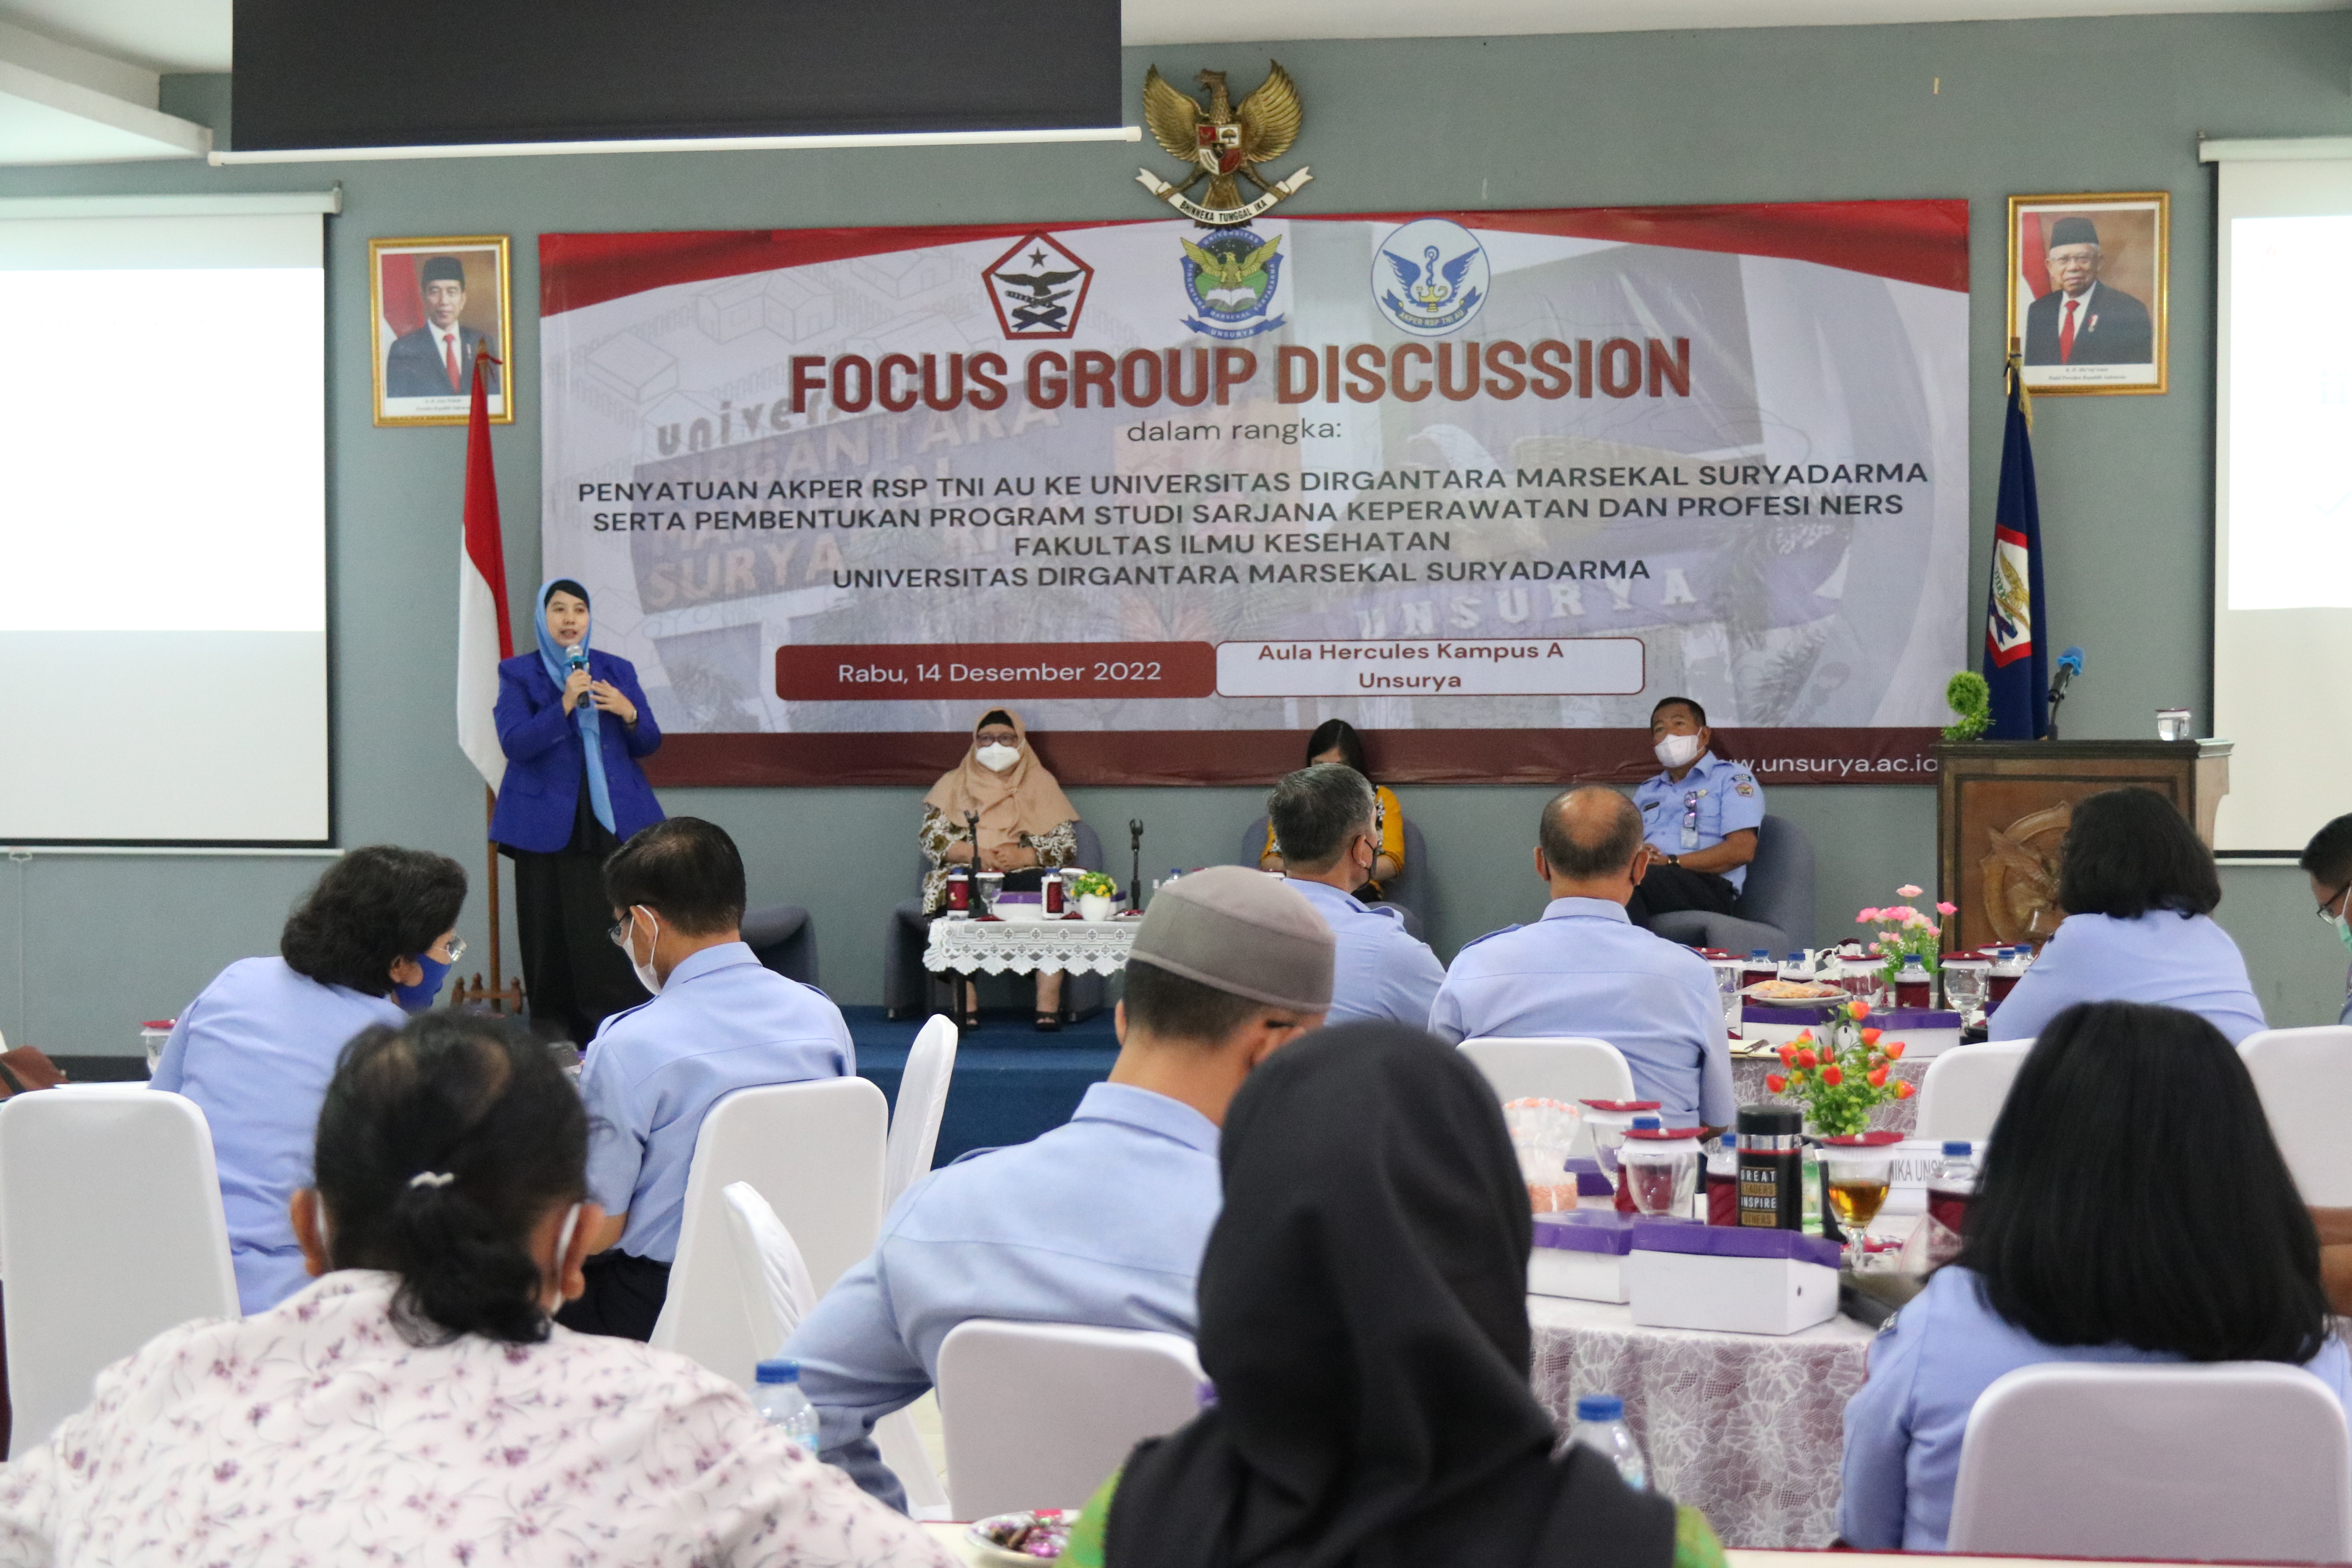 FOCUS GROUP DISCUSSION “PENYATUAN UNSURYA DAN AKPER RSP TNI AU”